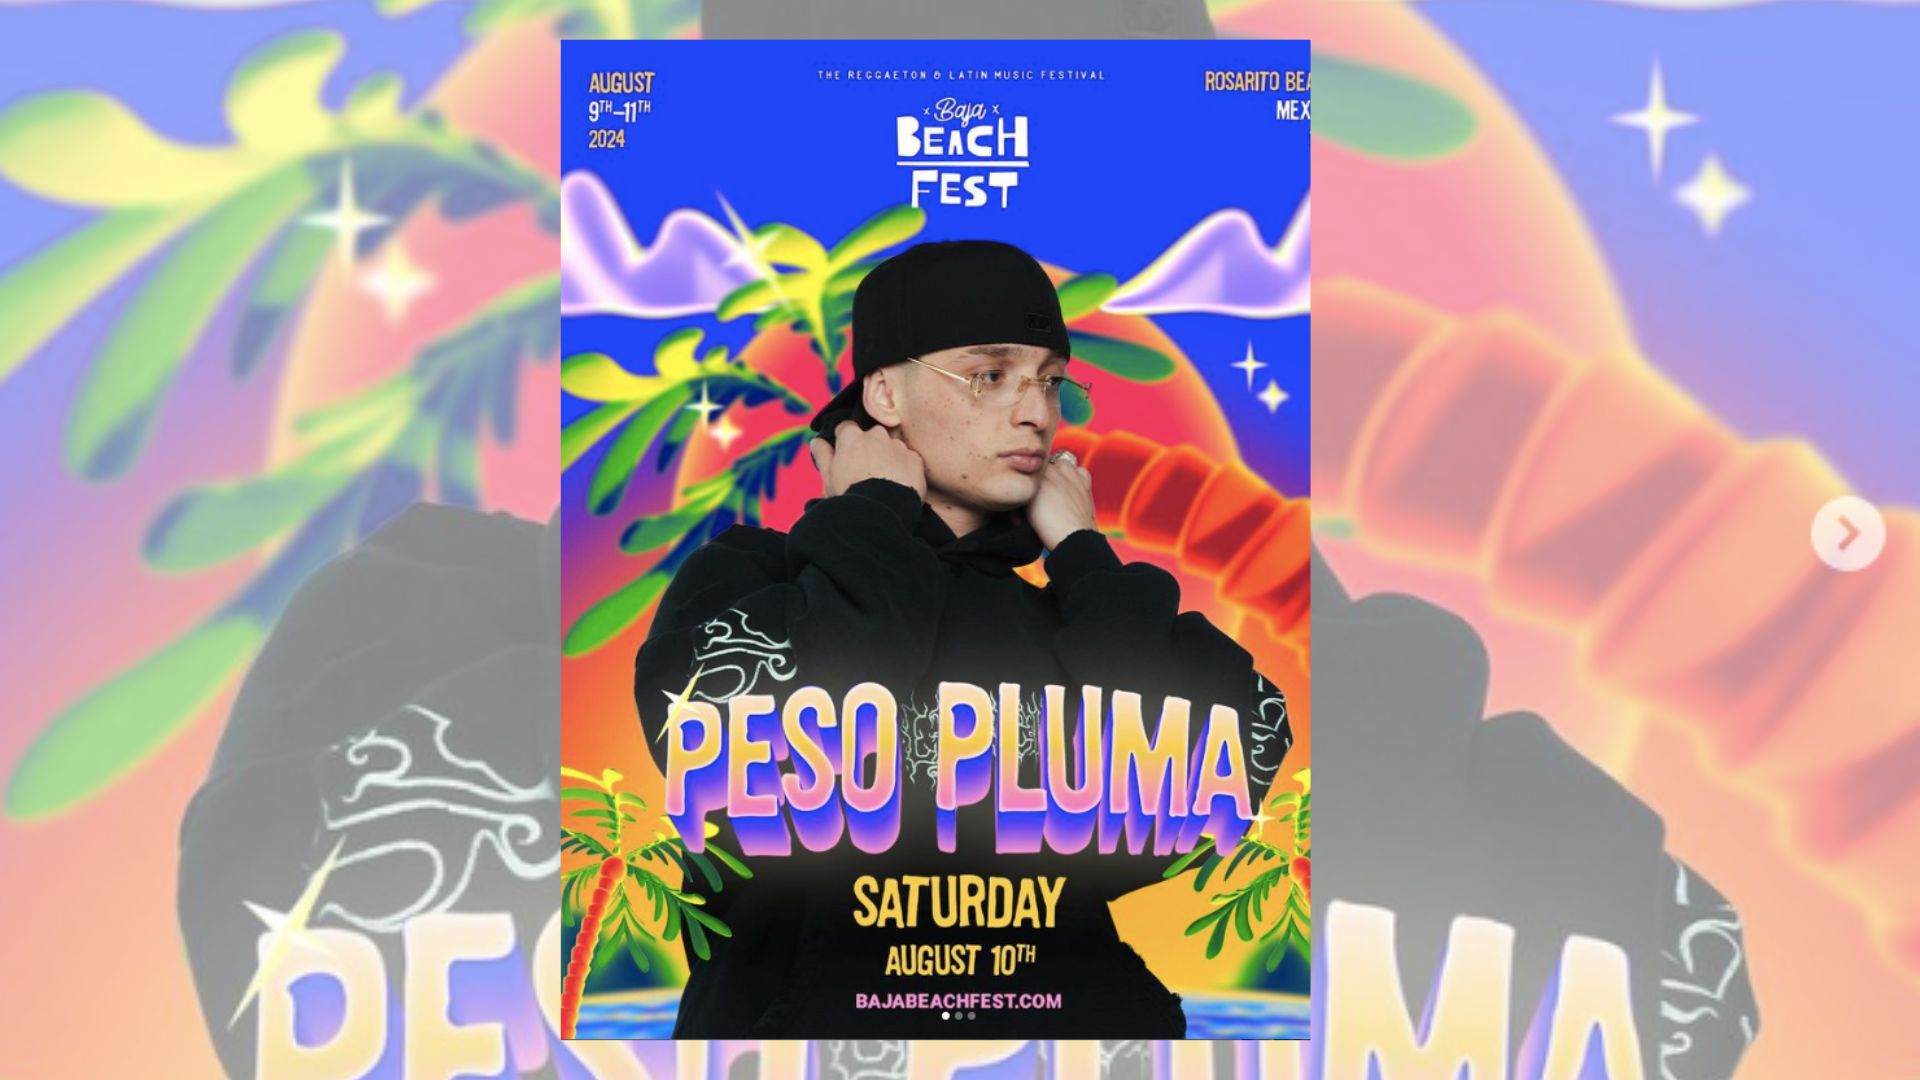 Peso Pluma, the first confirmed artist for Baja Beach Fest